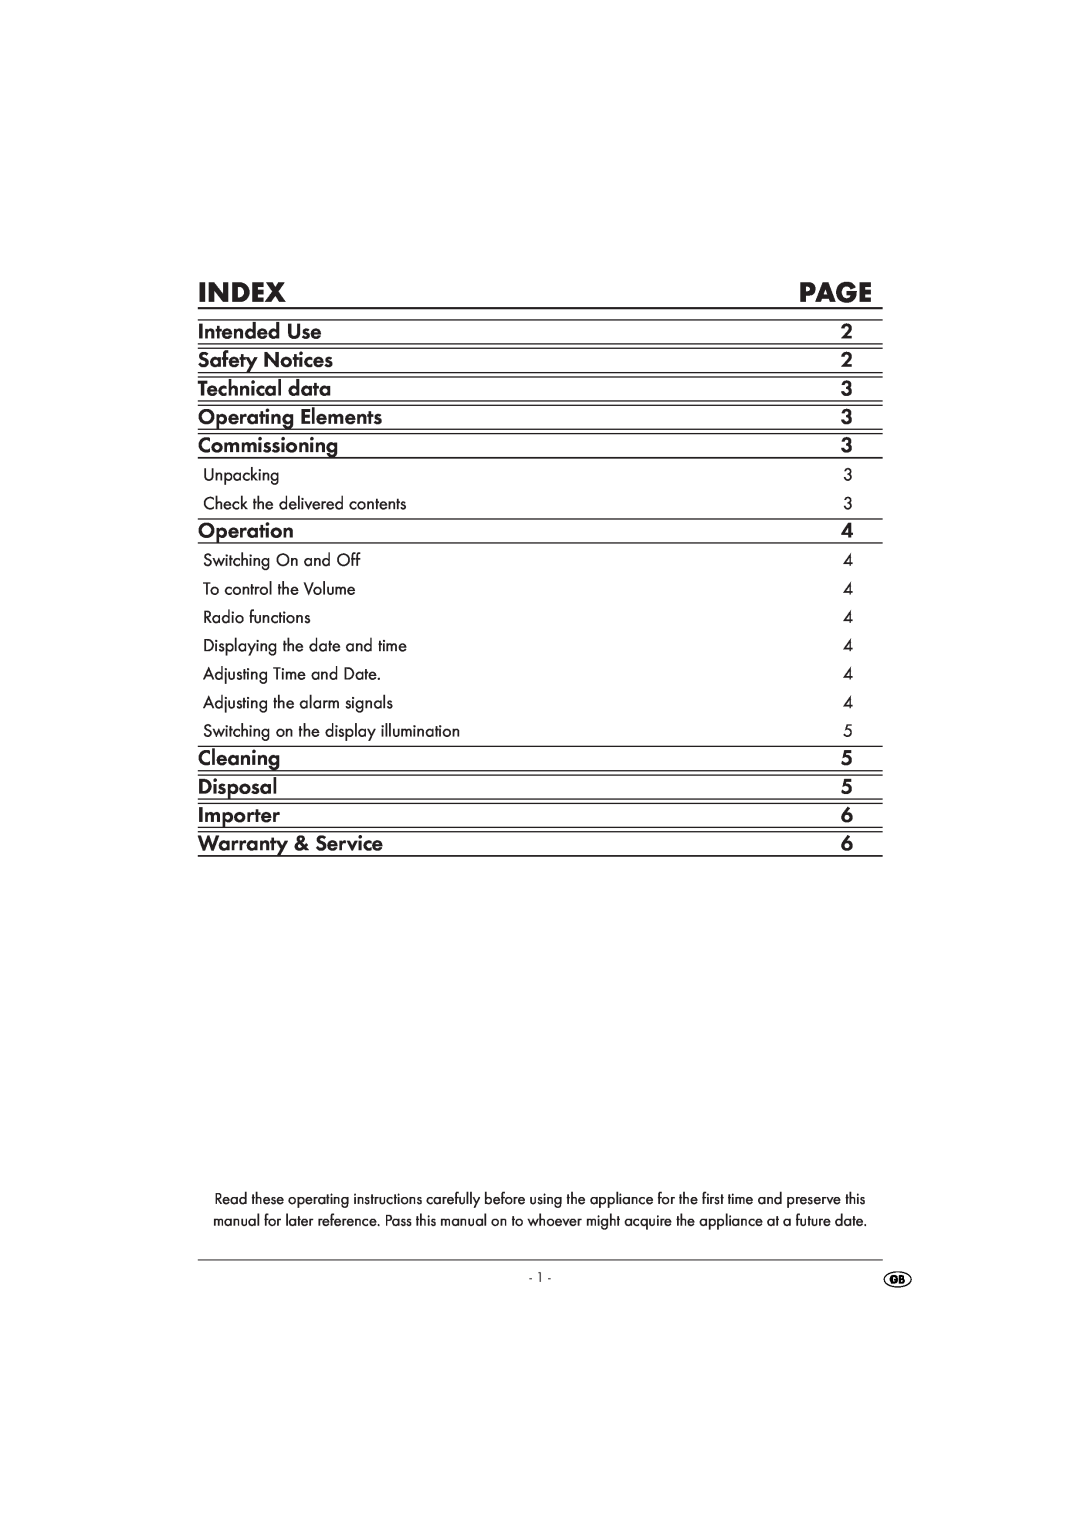 Kompernass KH 2282 manual Index, Page 